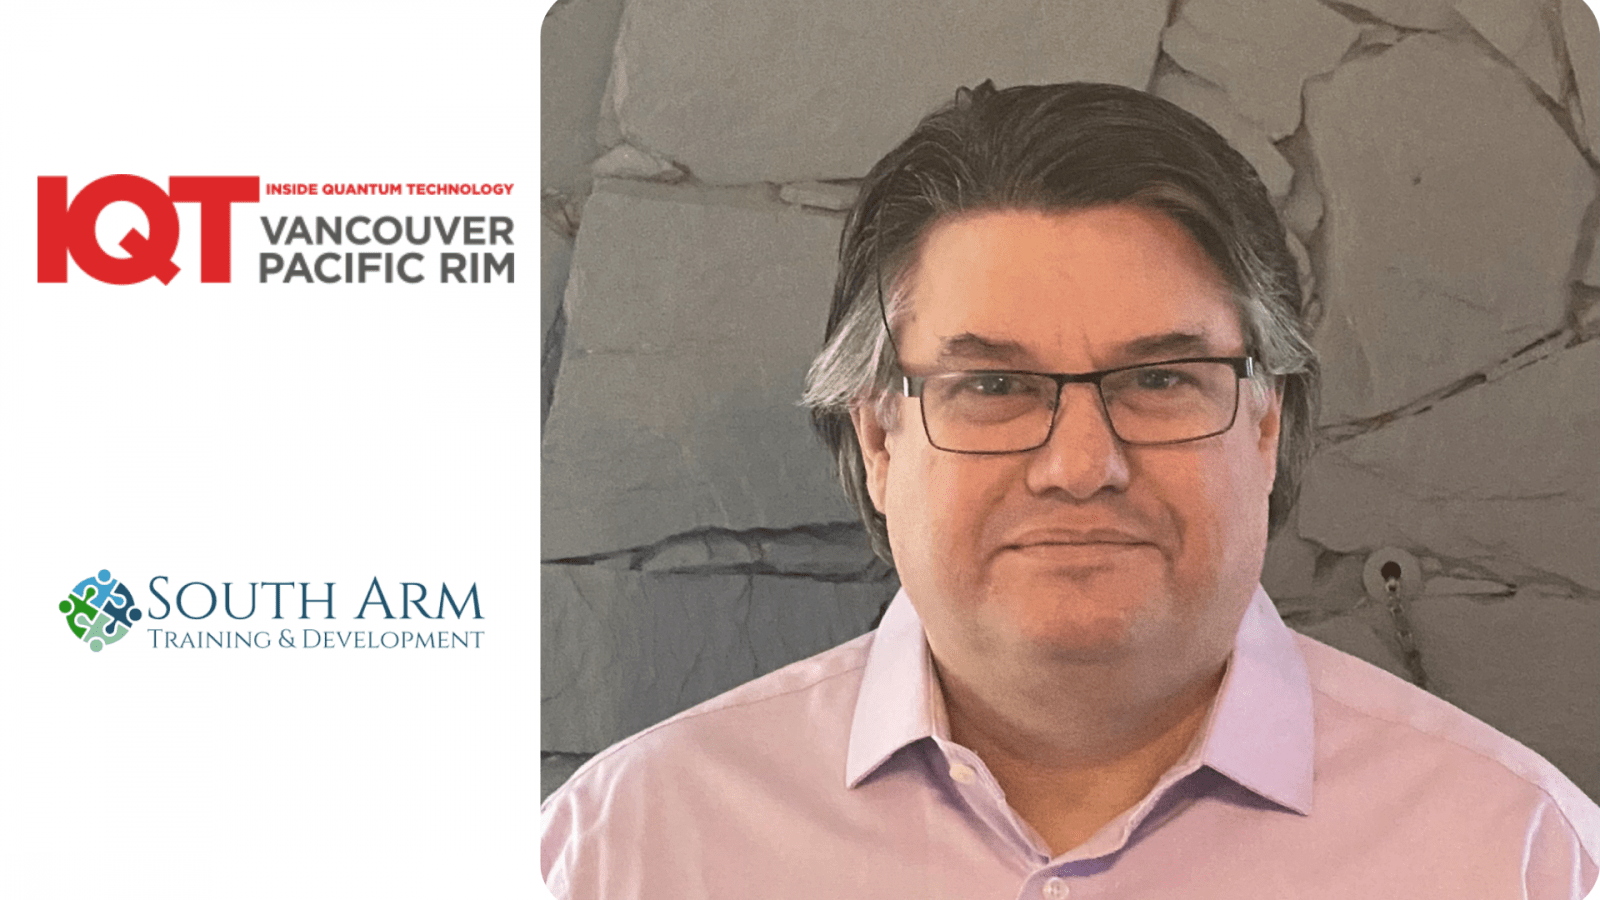 Dennis Green, a South Arm Training and Development Ltd. igazgatója az IQT Vancouver/Pacific Rim konferencia 2024-es előadója